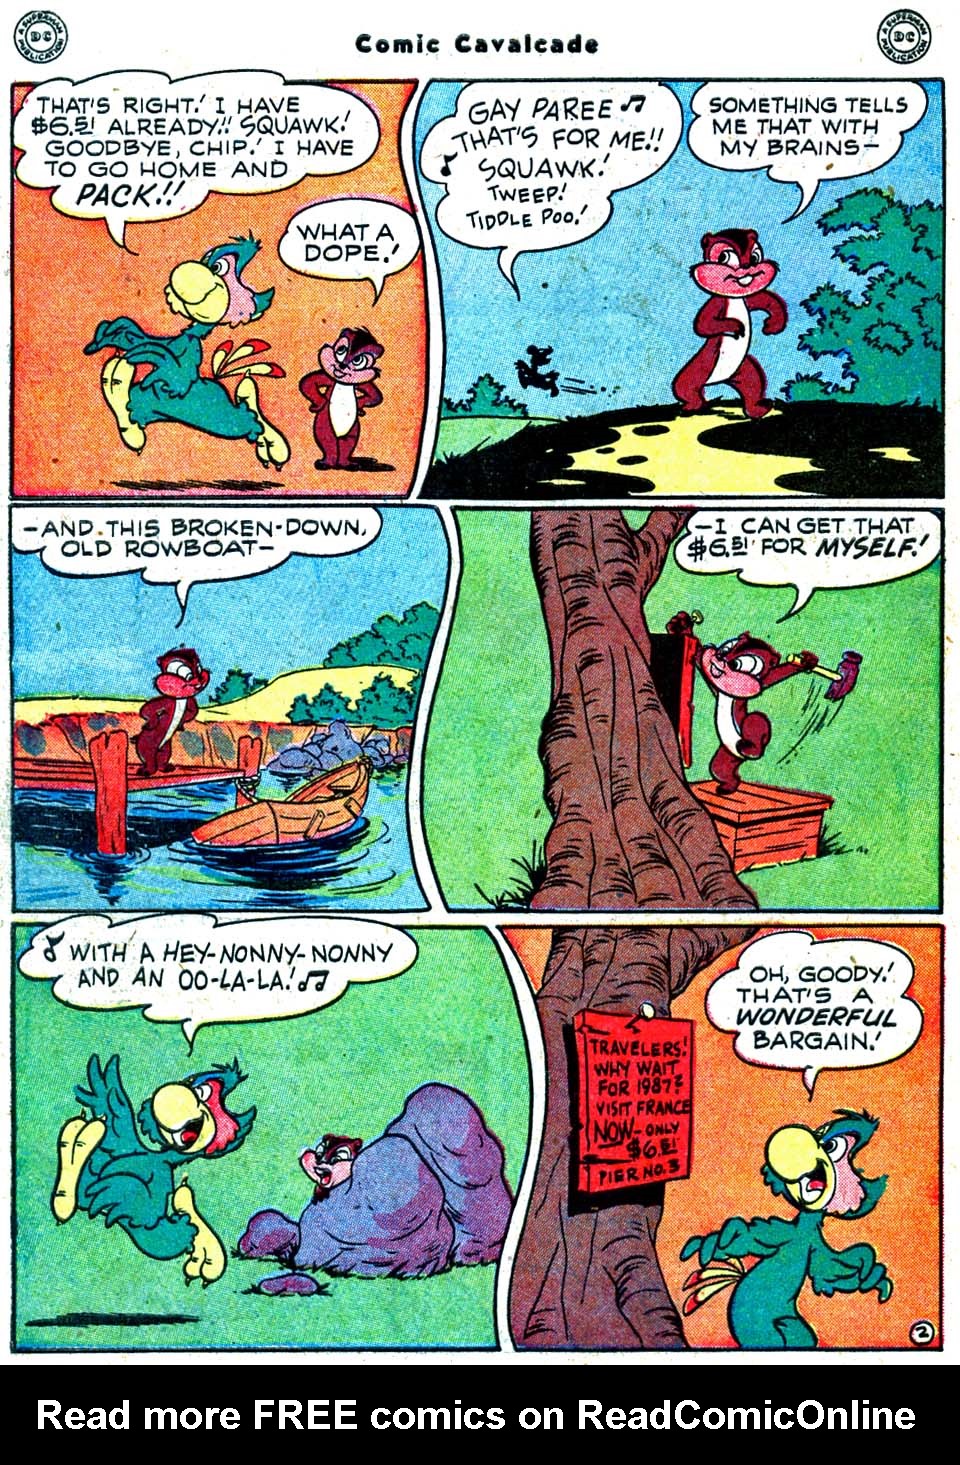 Comic Cavalcade issue 32 - Page 50